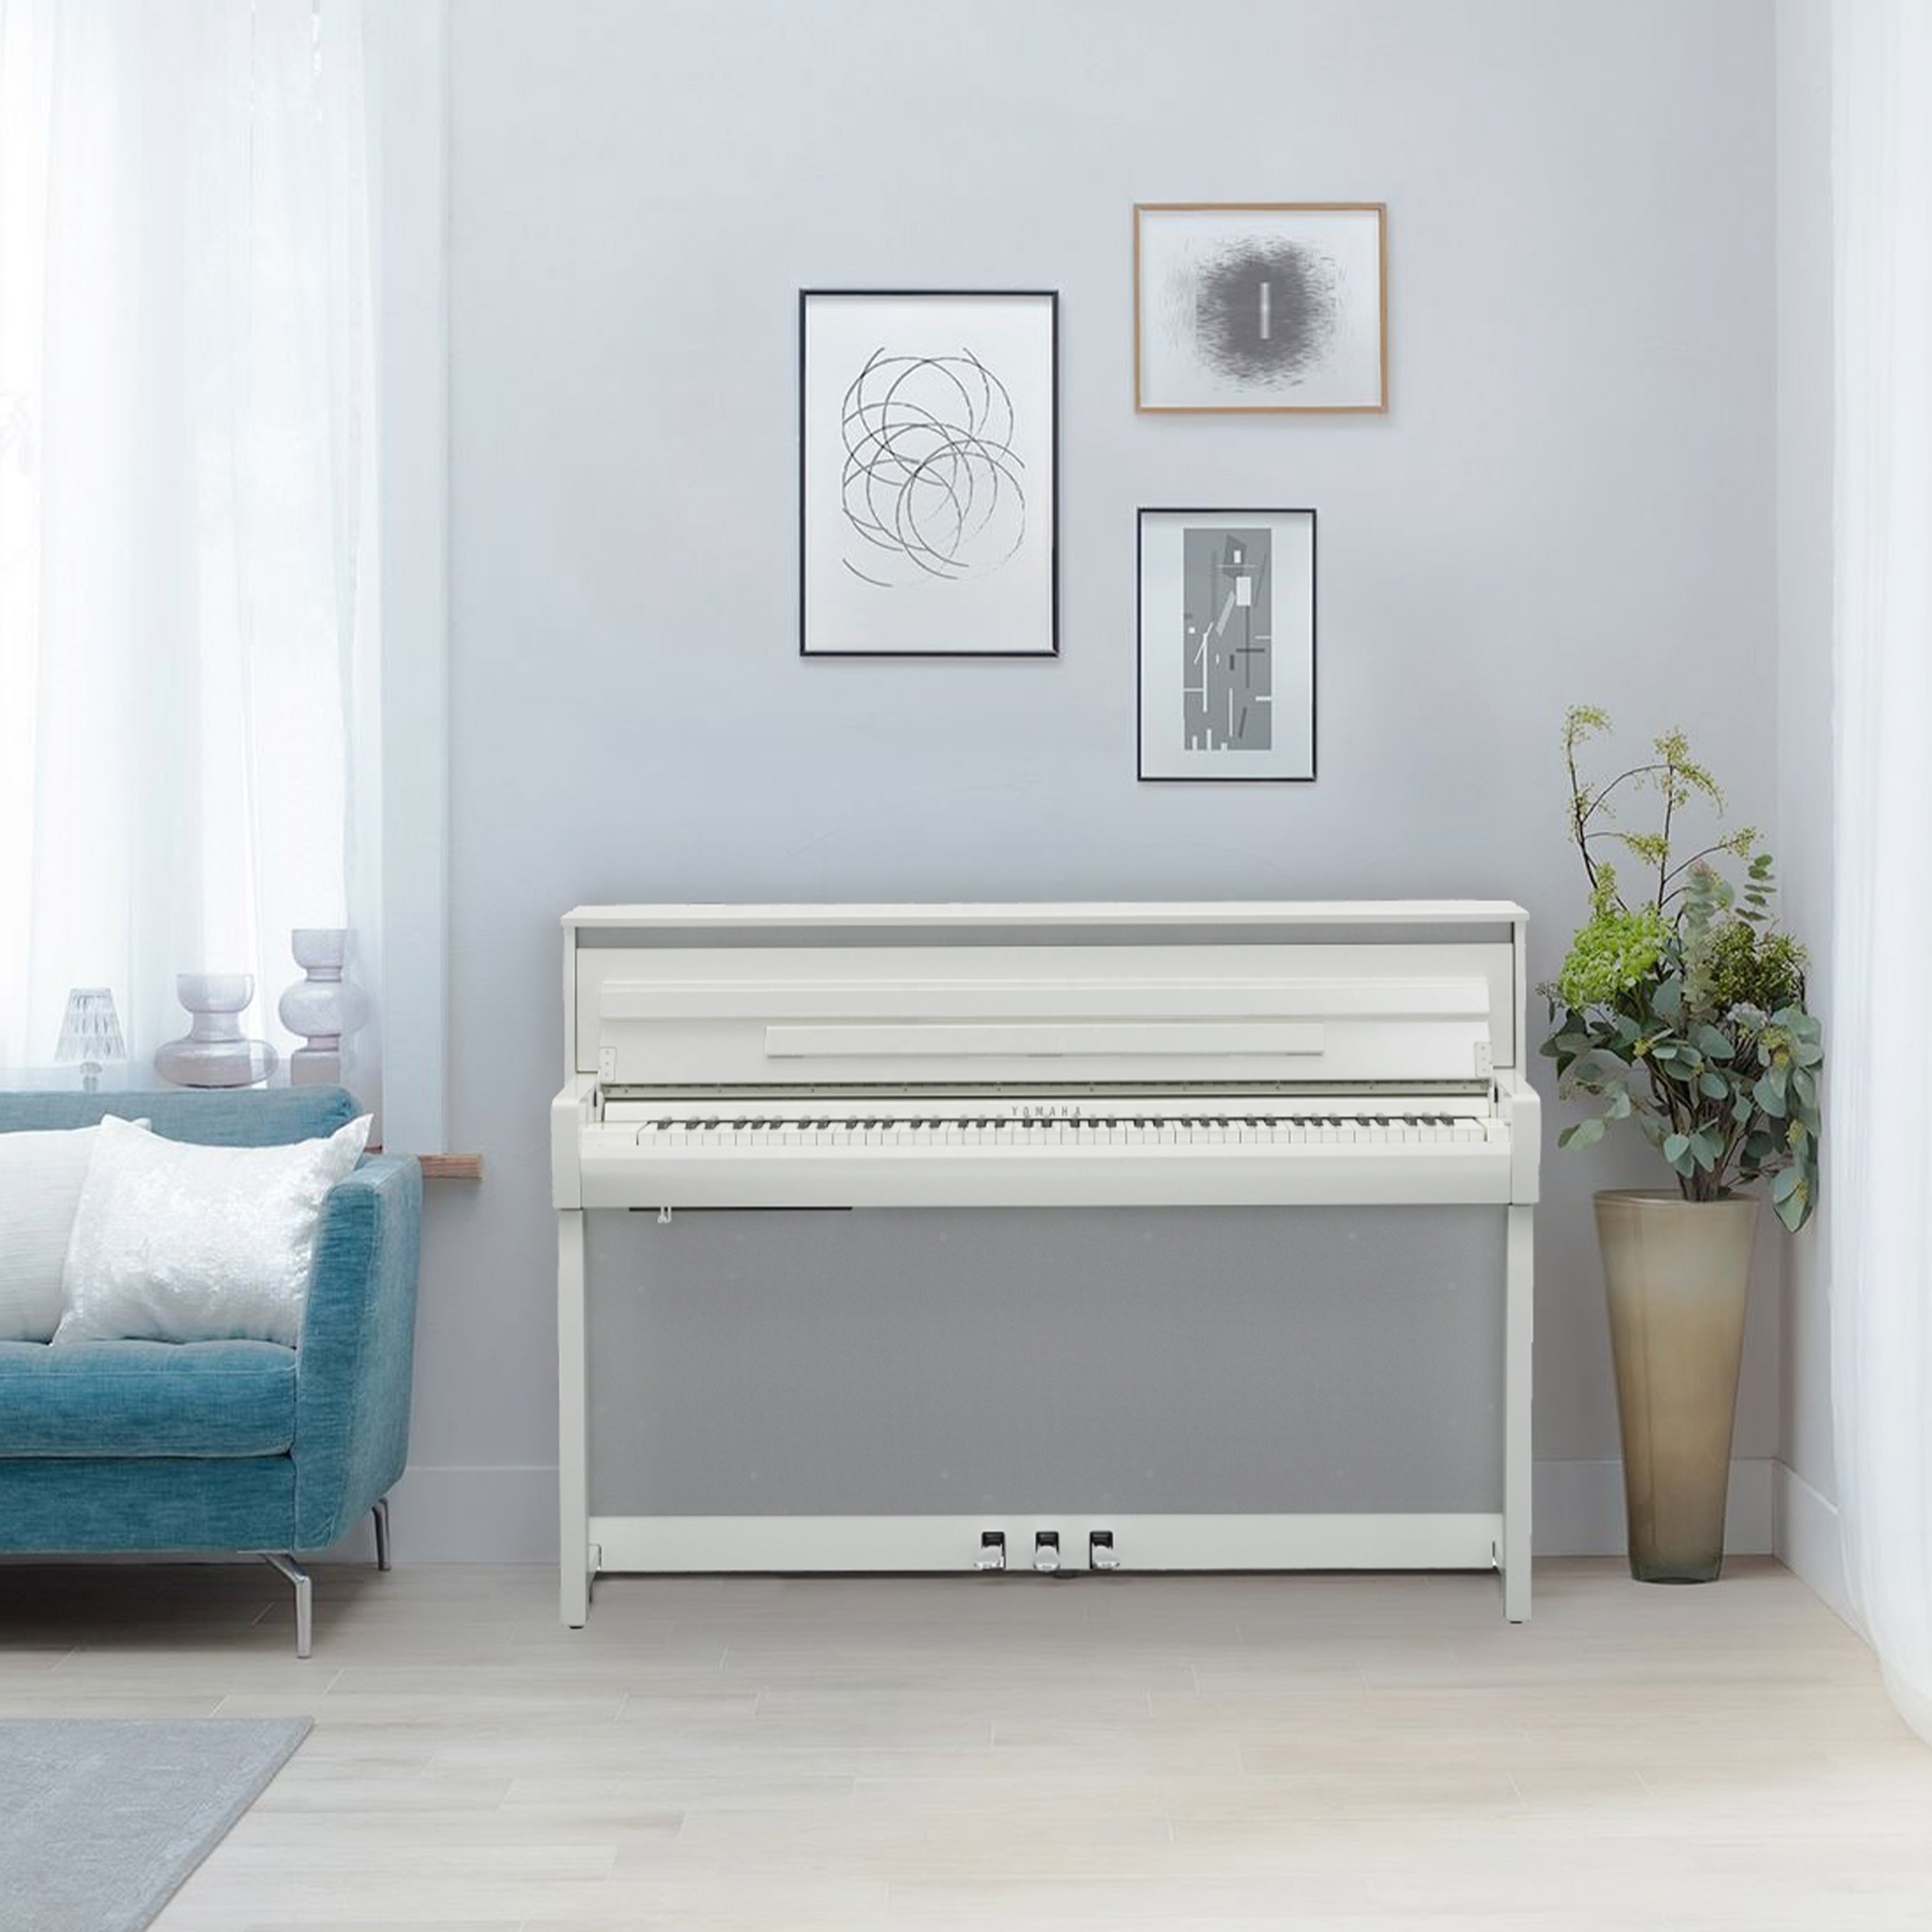 Yamaha Clavinova CLP-785 Digital Piano - Polished White